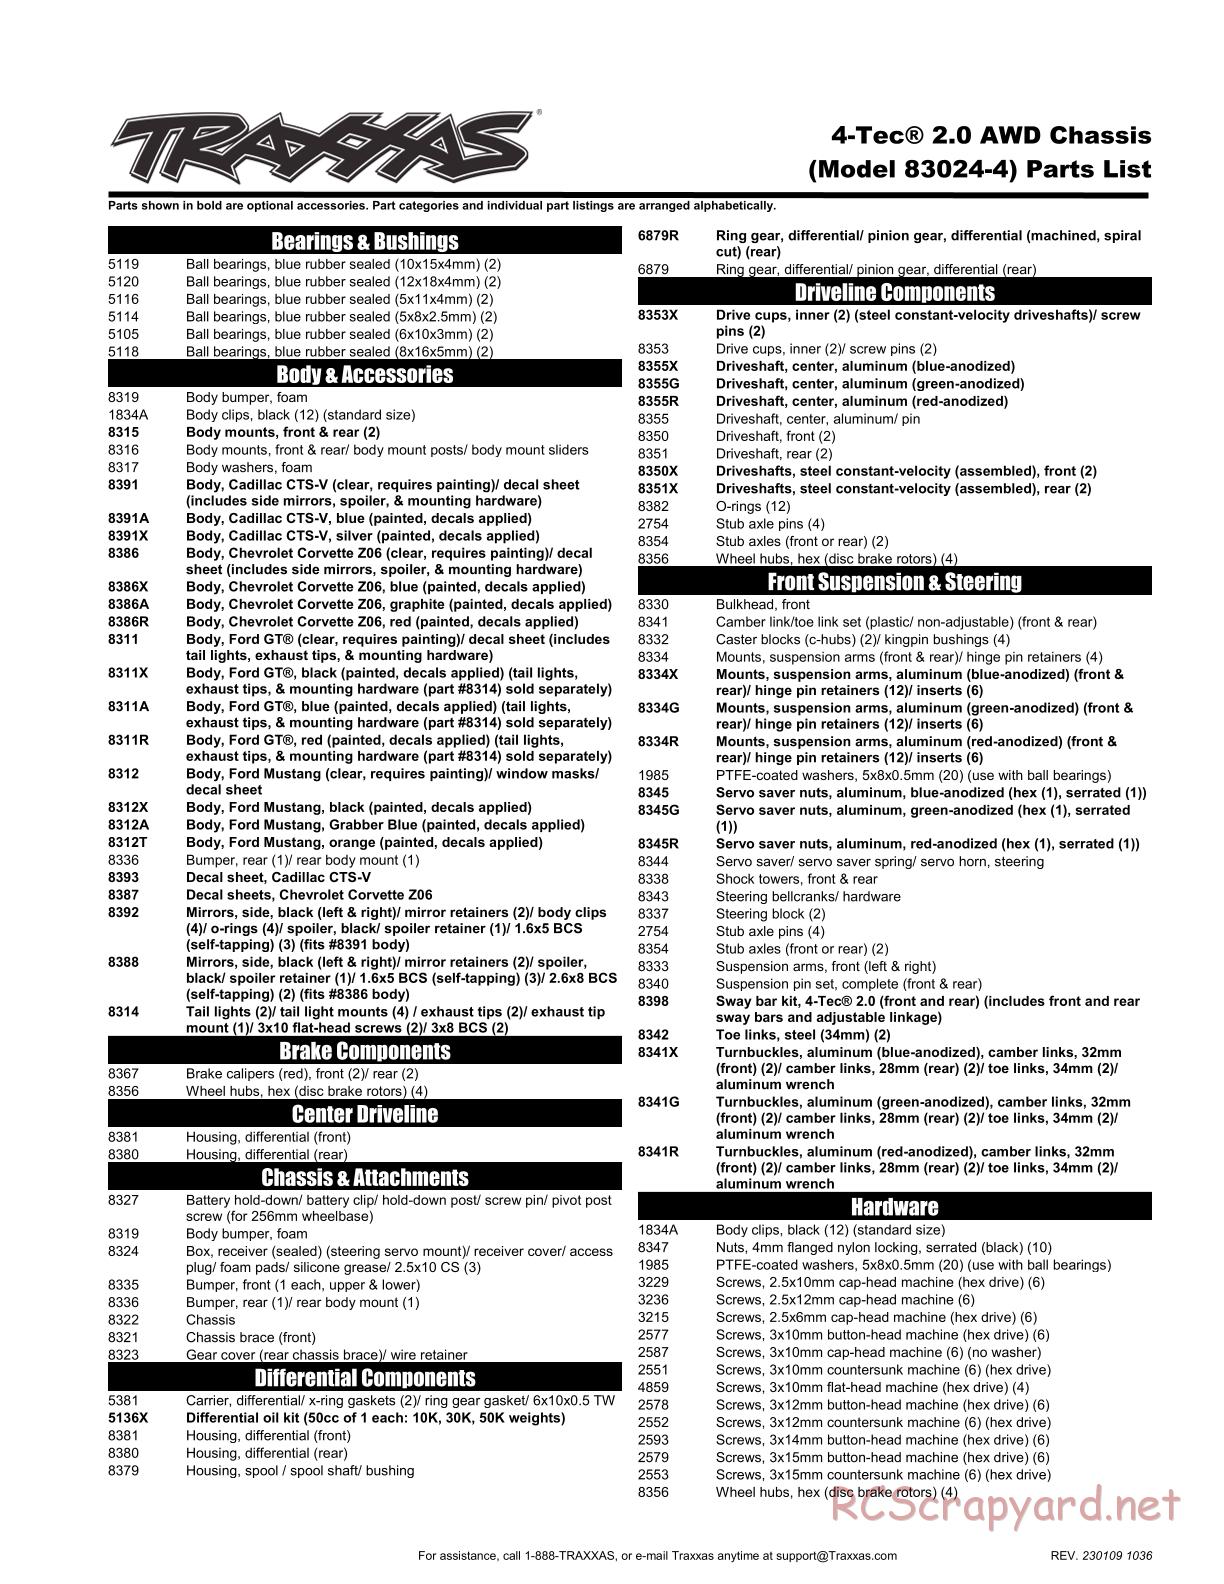 Traxxas - 4-Tec 2.0 XL-5 - Parts List - Page 1